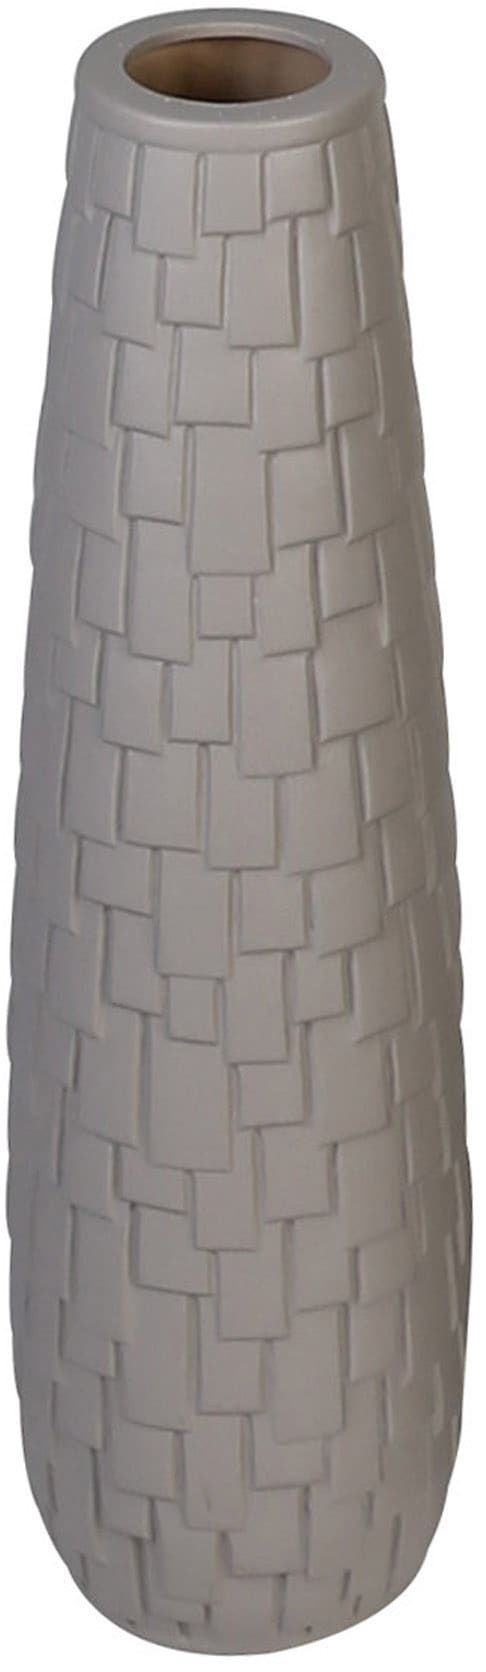 GILDE Bodenvase »Brick«, (1 cm bestellen Keramik, St.), hoch dekorative matt, Riemchen-Struktur, 57 bequem